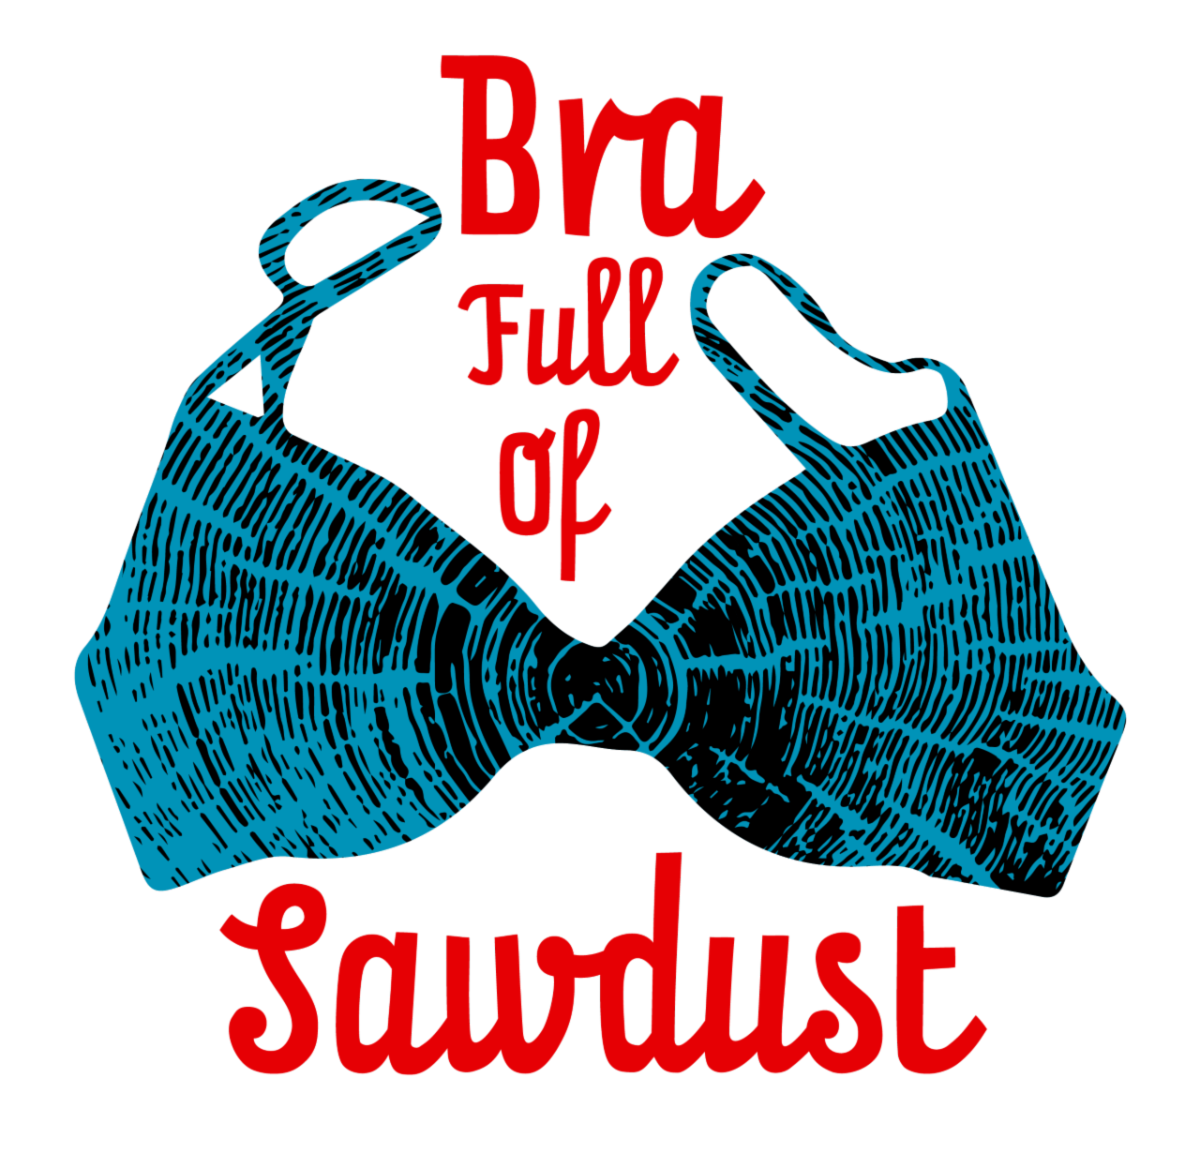 Bra Full of Sawdust